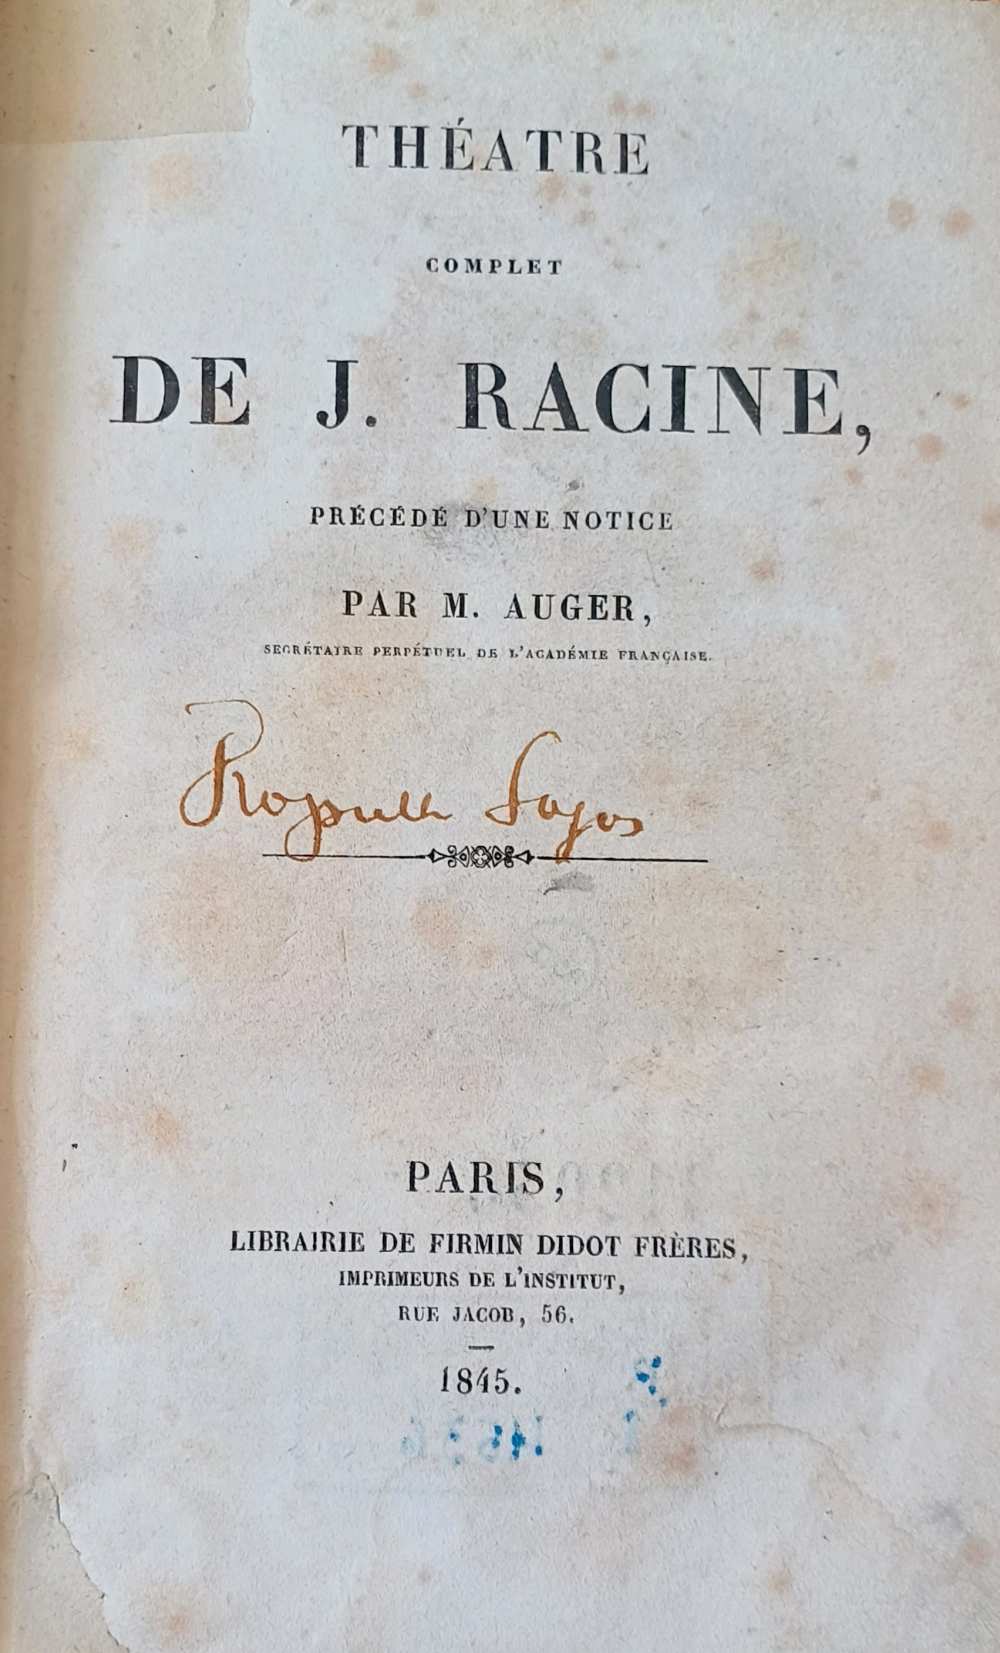 Théatre complet de J. Racine, Paris, Didot, 1845. Címlap – Törzsgyűjtemény https://nektar.oszk.hu/hu/manifestation/3150763